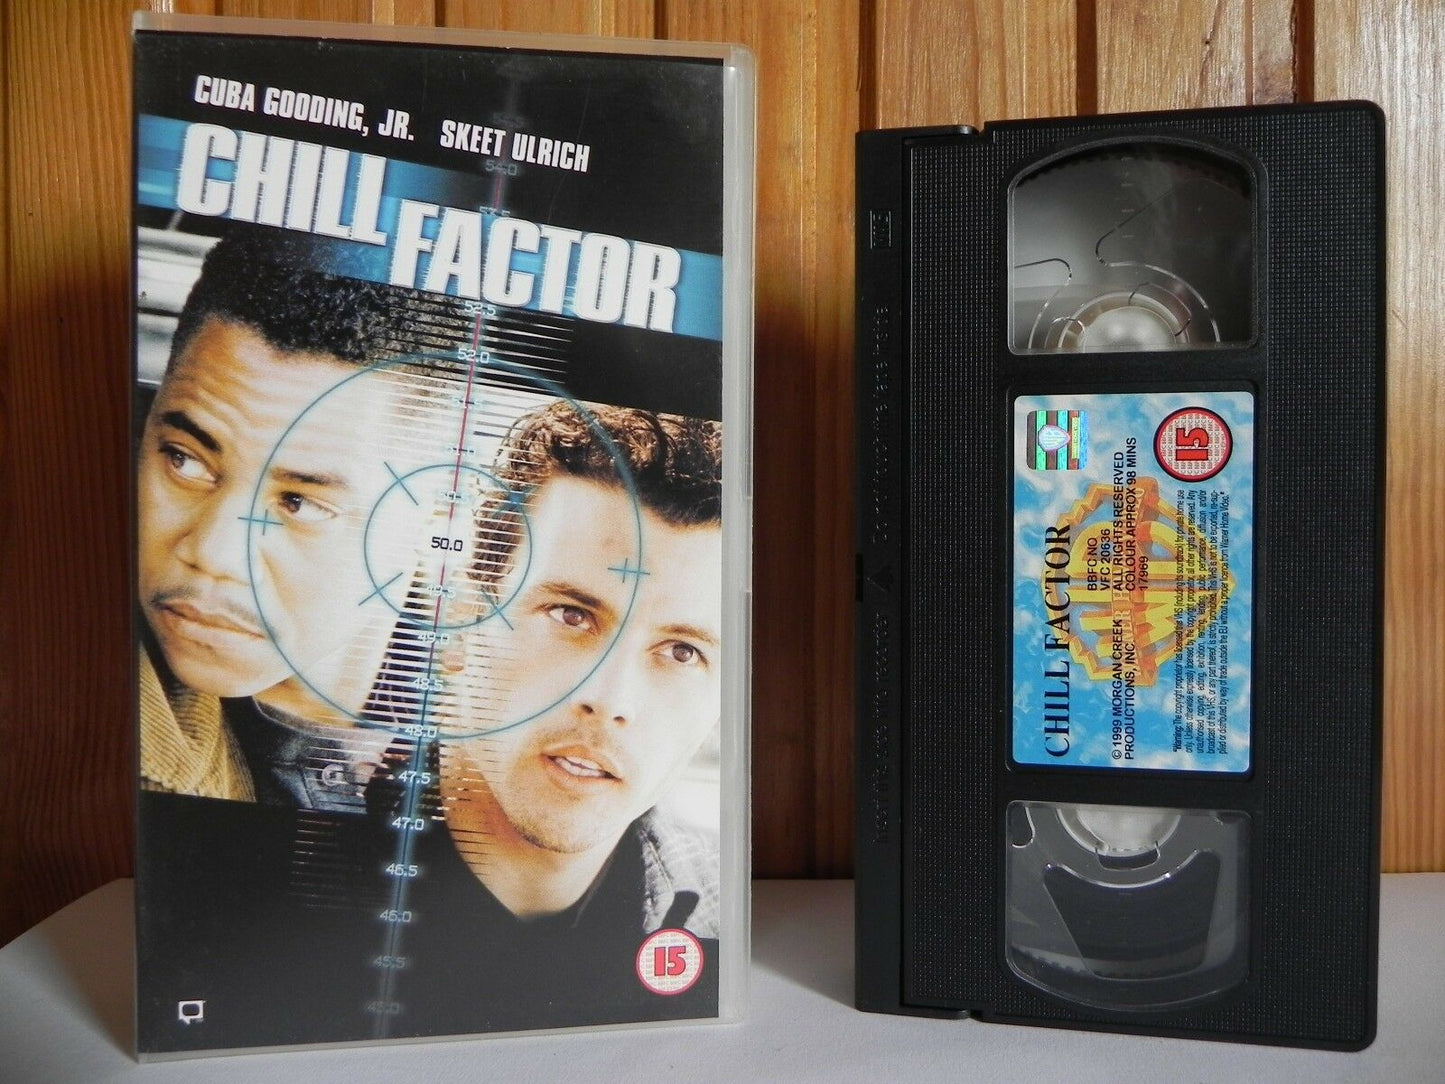 Chill Factor - Warner Home - Action - Cuba Gooding, Jr. Skeet Urlich - Pal VHS-